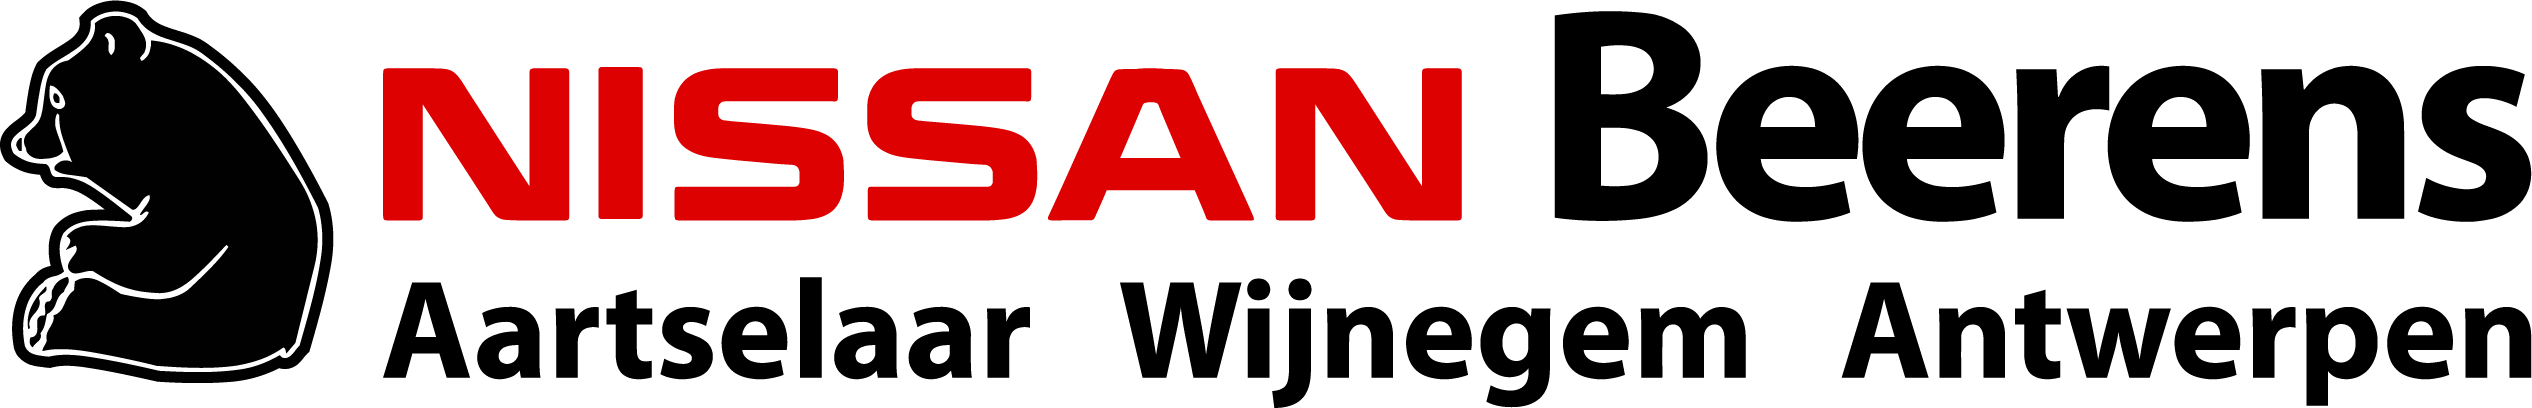 logo Nissan Beerens Aartselaar